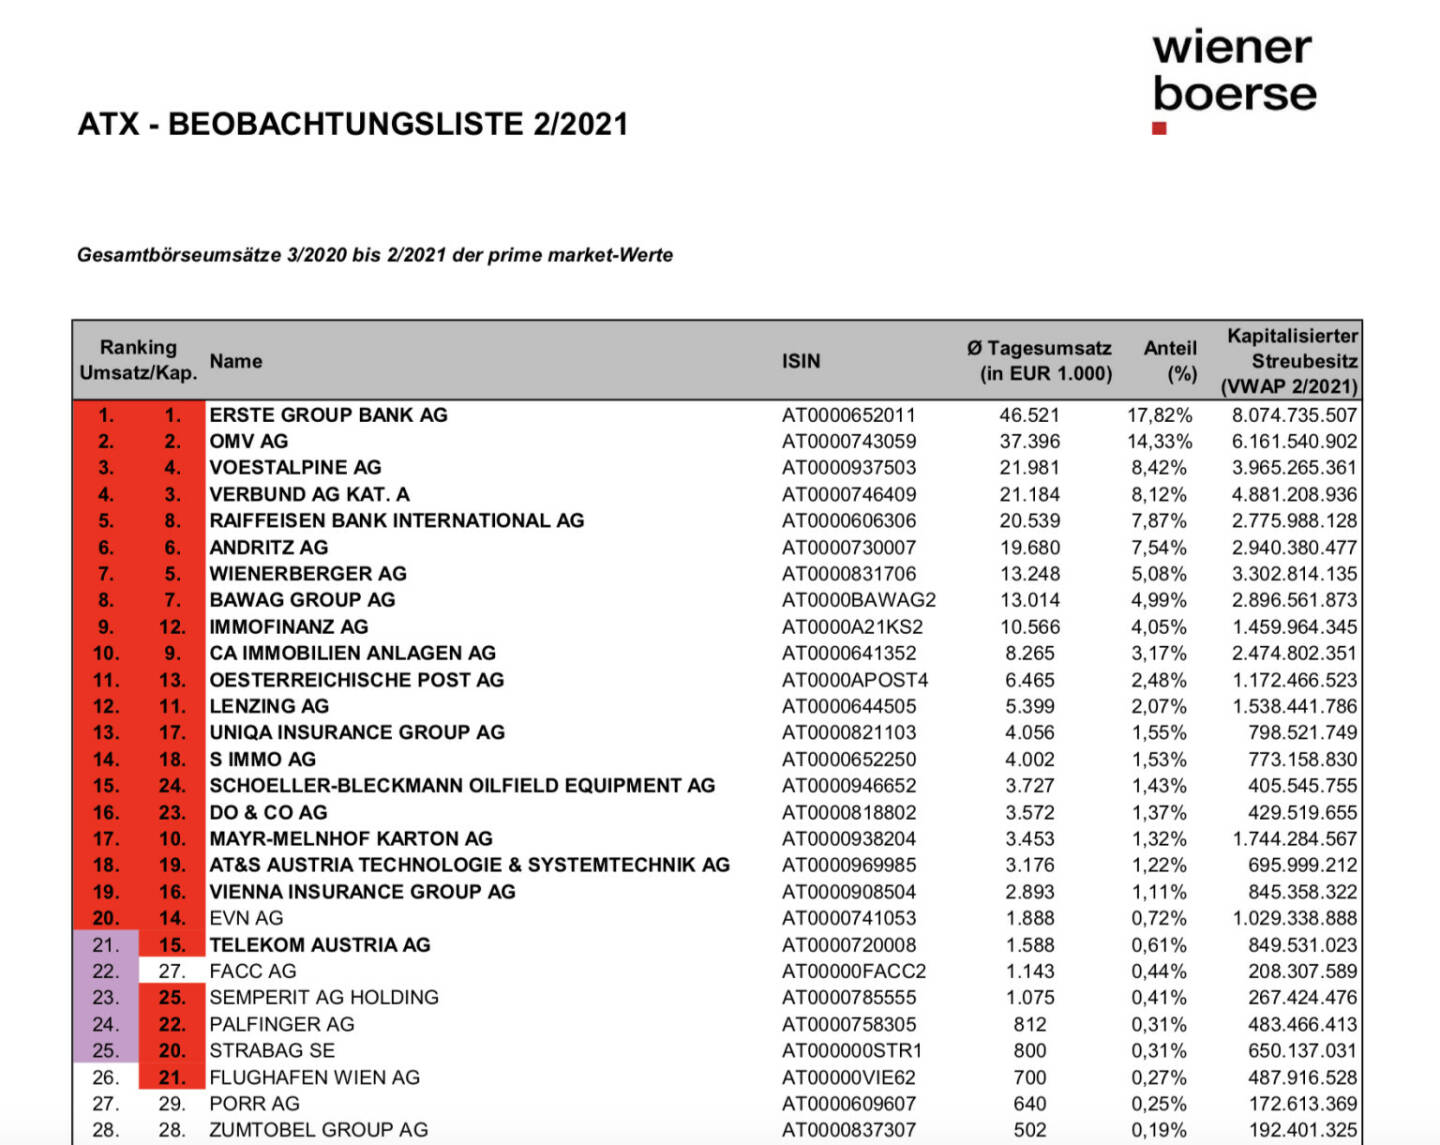 ATX-Beobachtungsliste 02/2021 (c) Wiener Börse